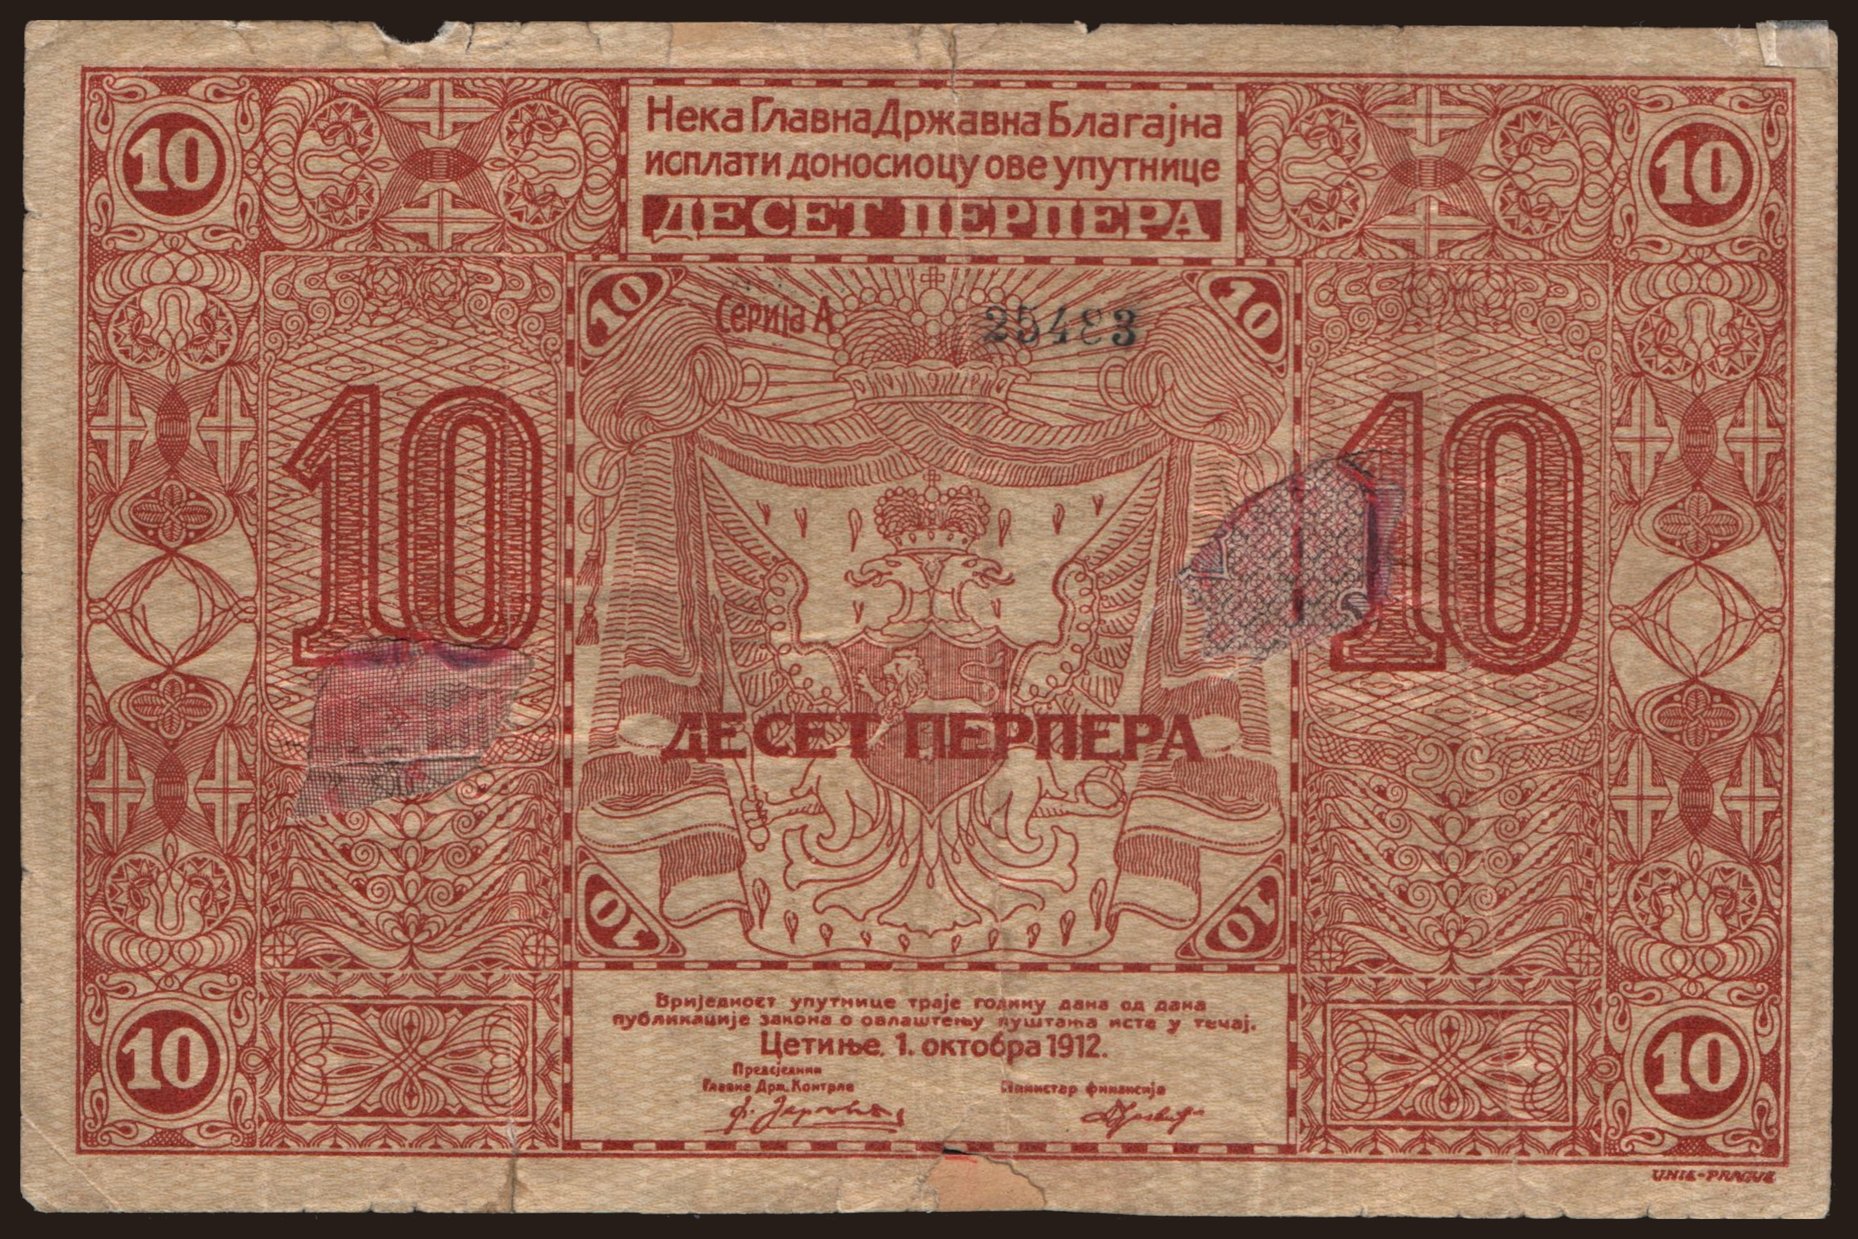 10 perpera, 1912